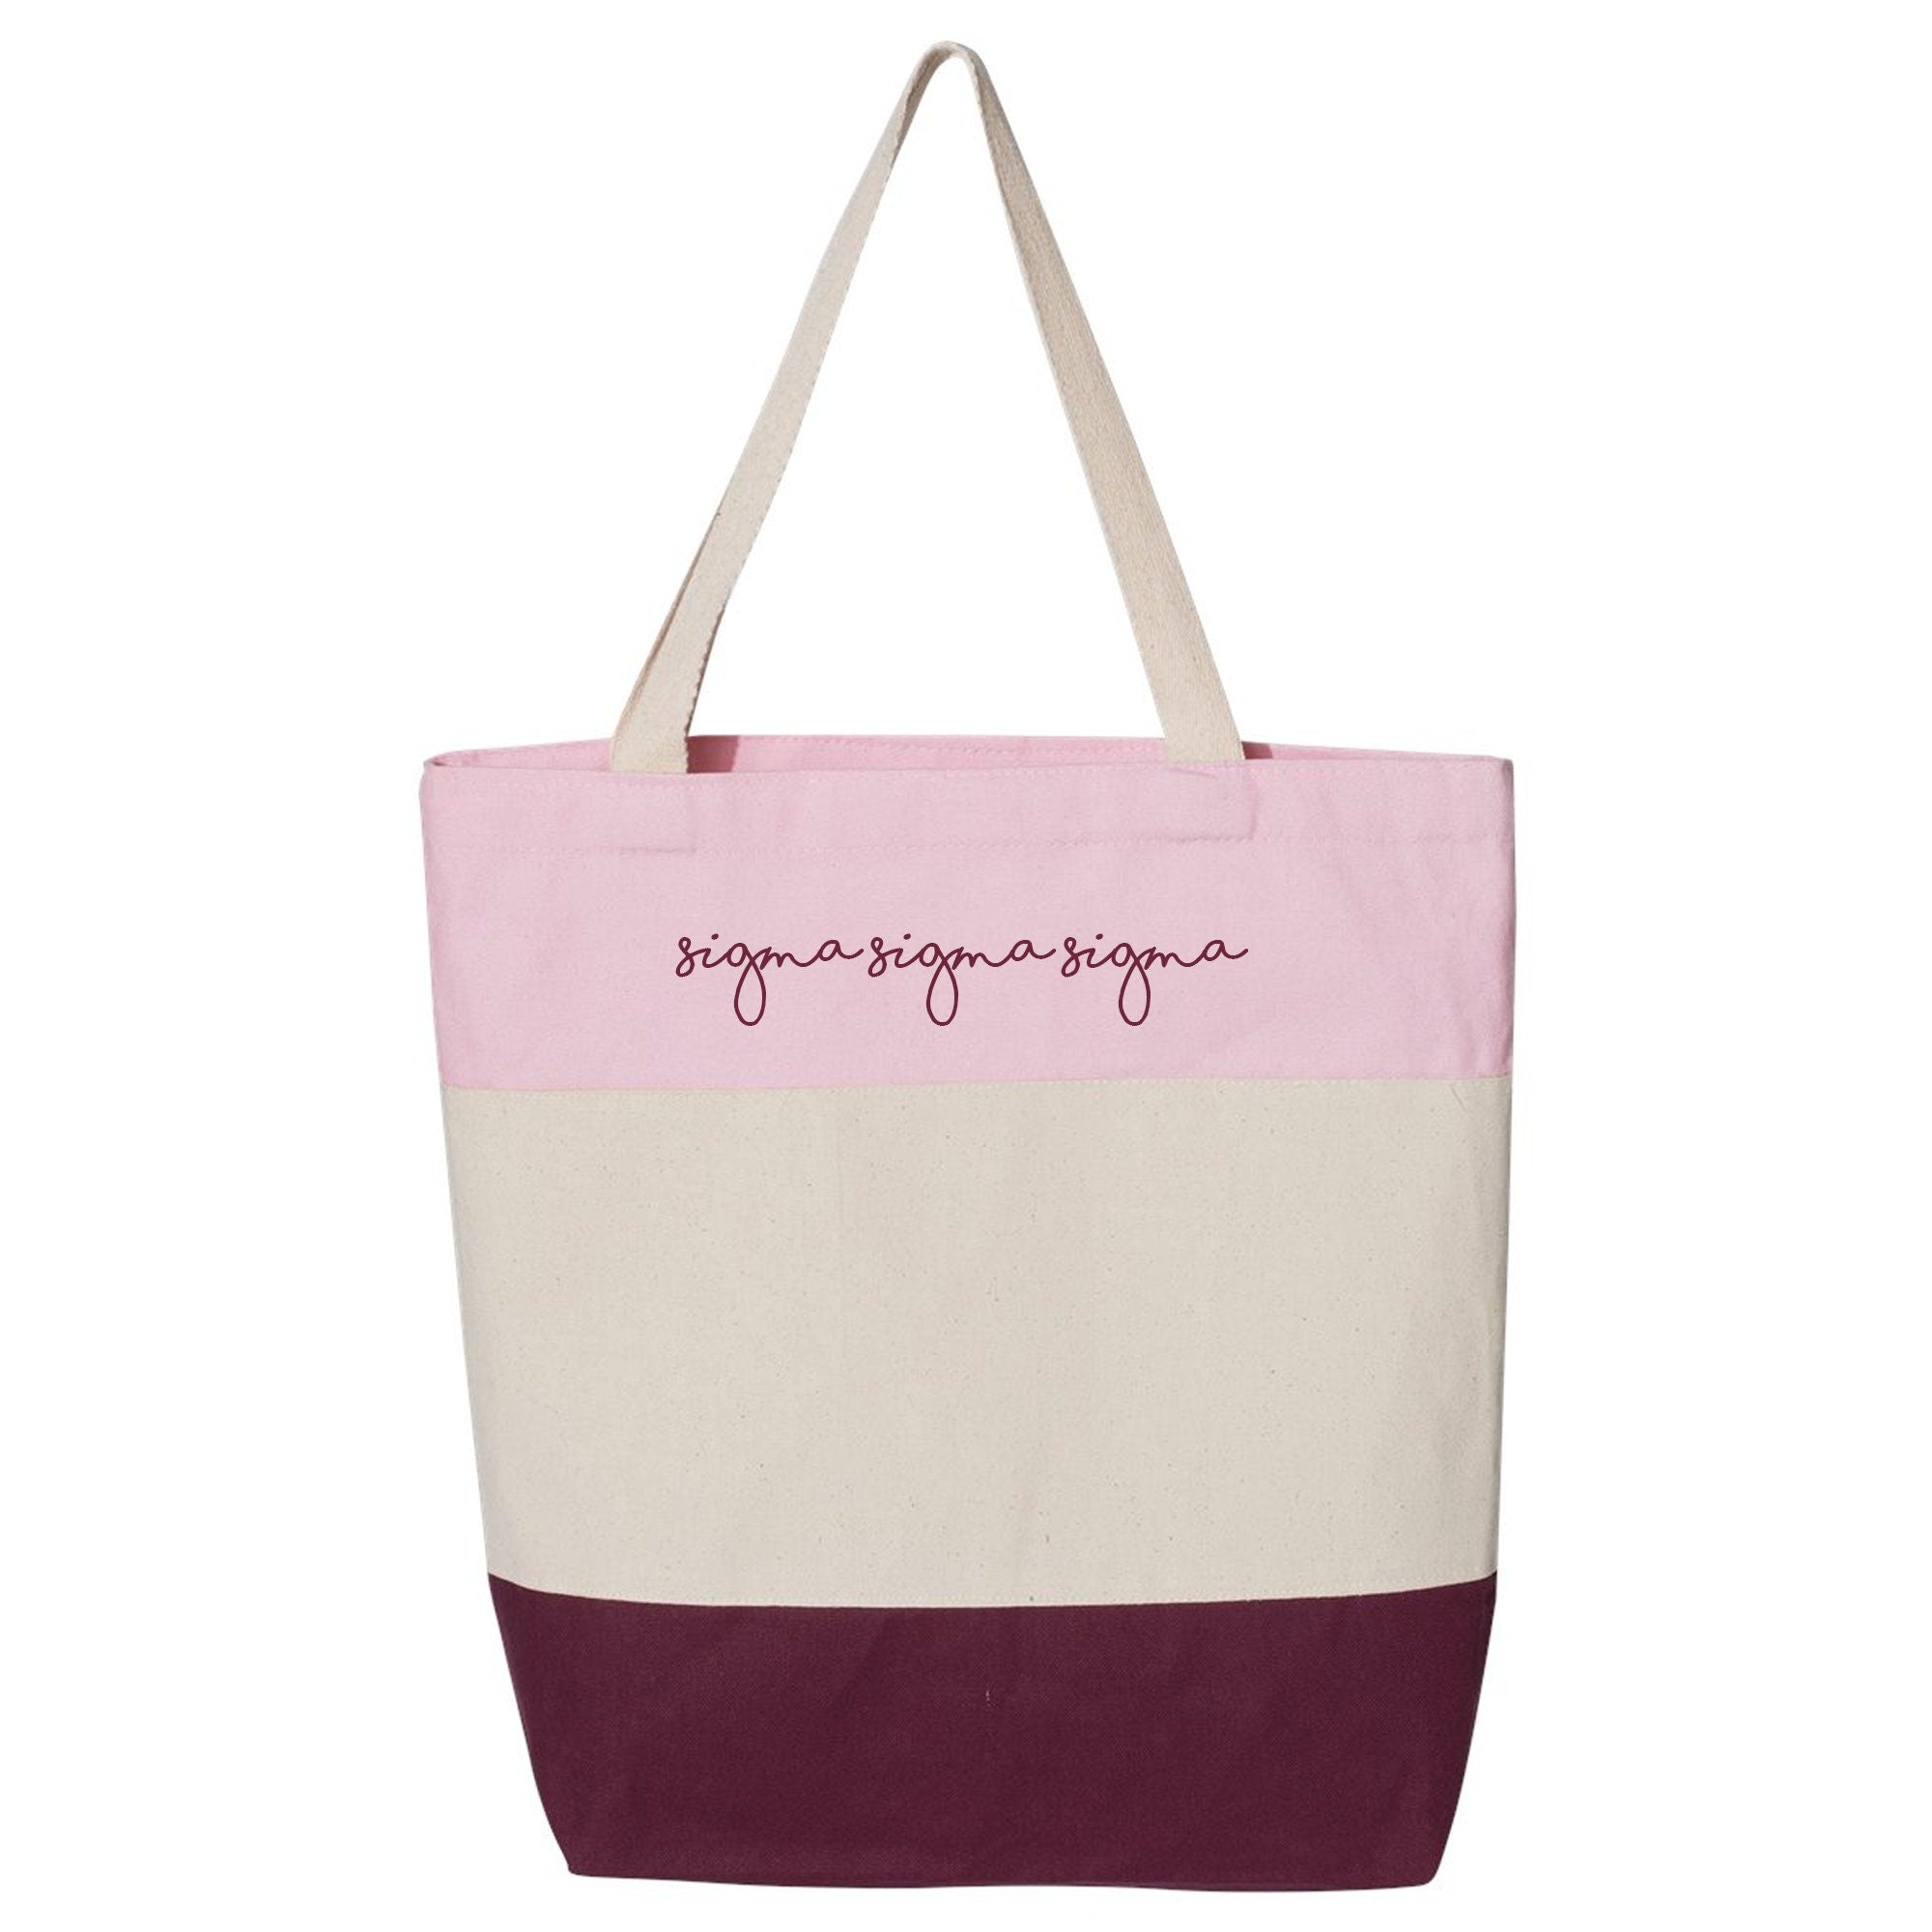 Sigma Sigma Sigma - Tote Bag, Sorority Gift, Bid Day Gift, Big & Little Reveal - Go Greek Chic